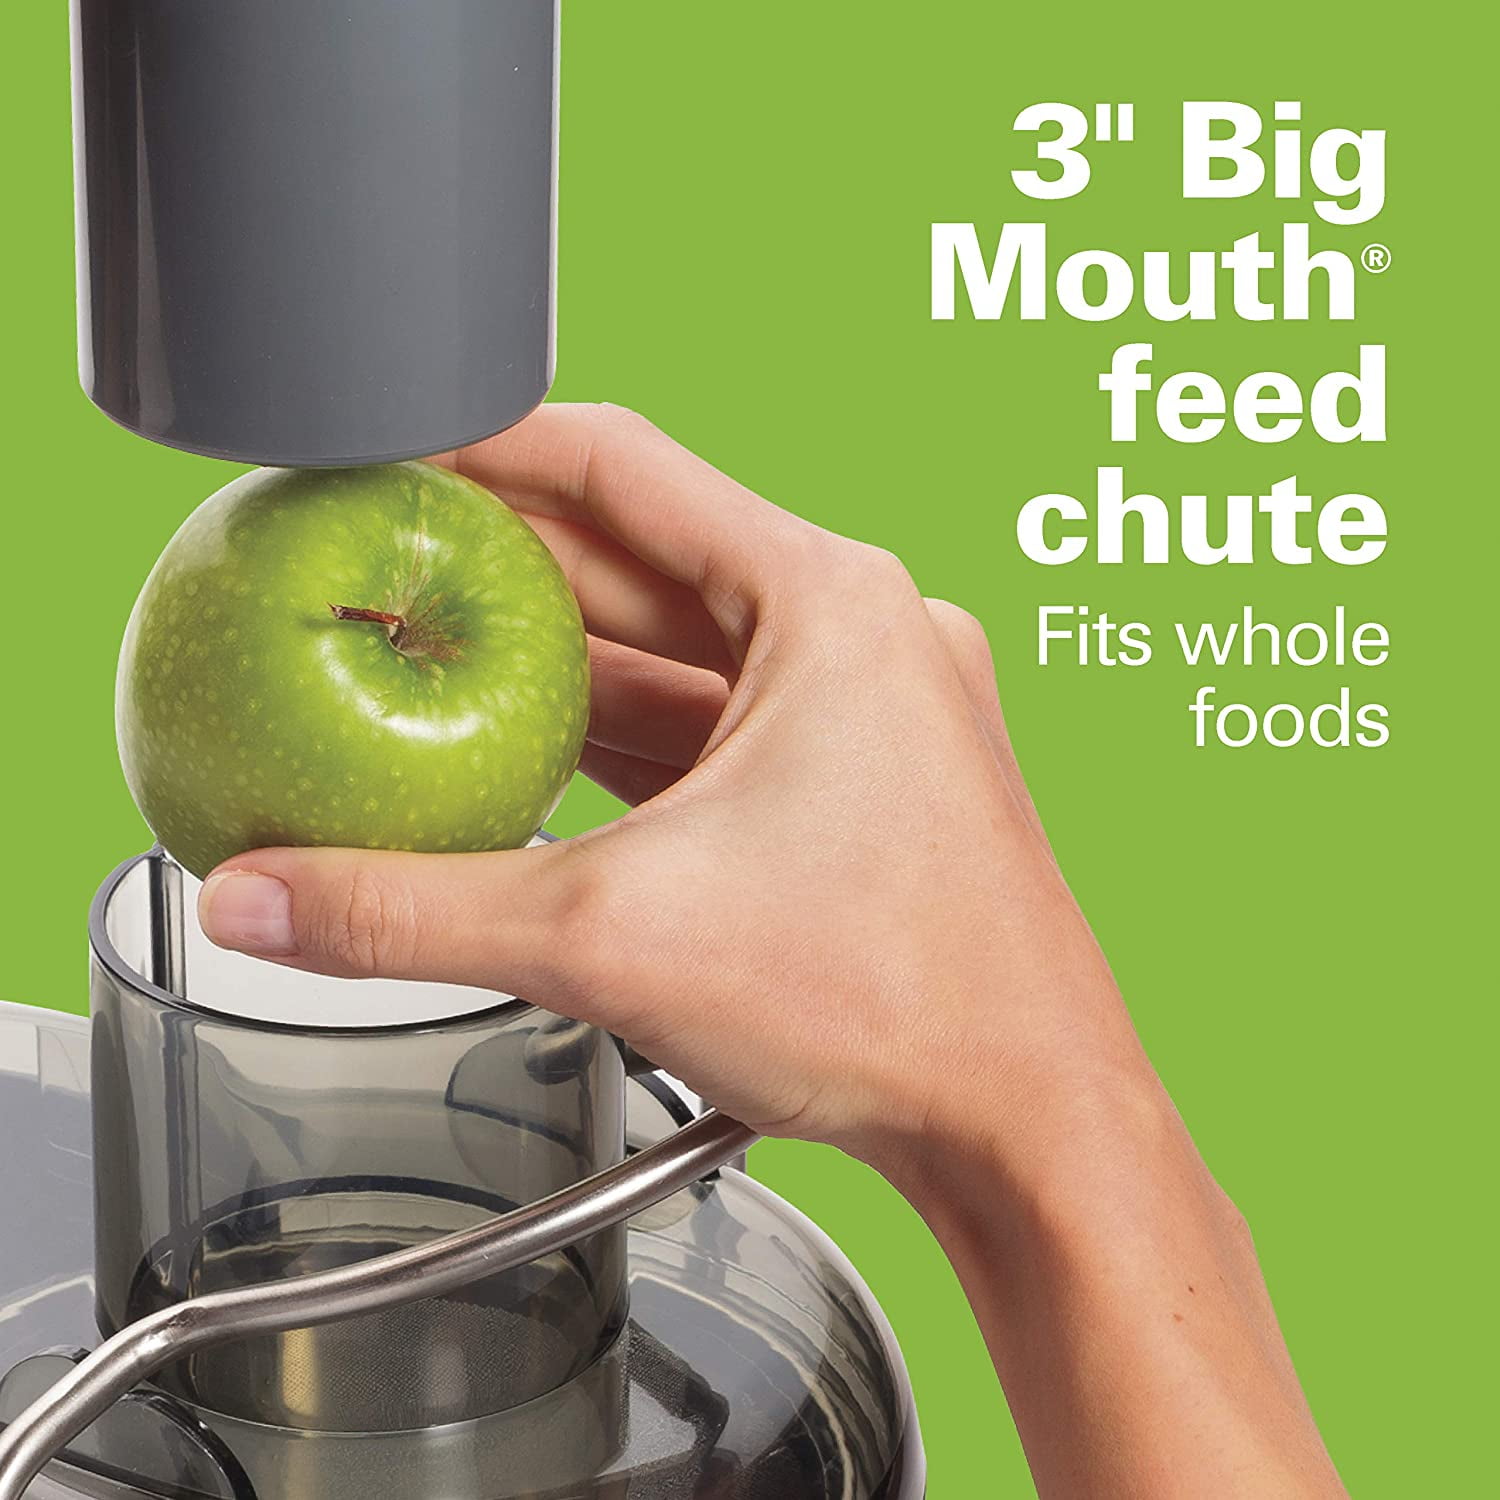 Hamilton Beach Juicer Machine, Big Mouth Large 3” Feed Chute for